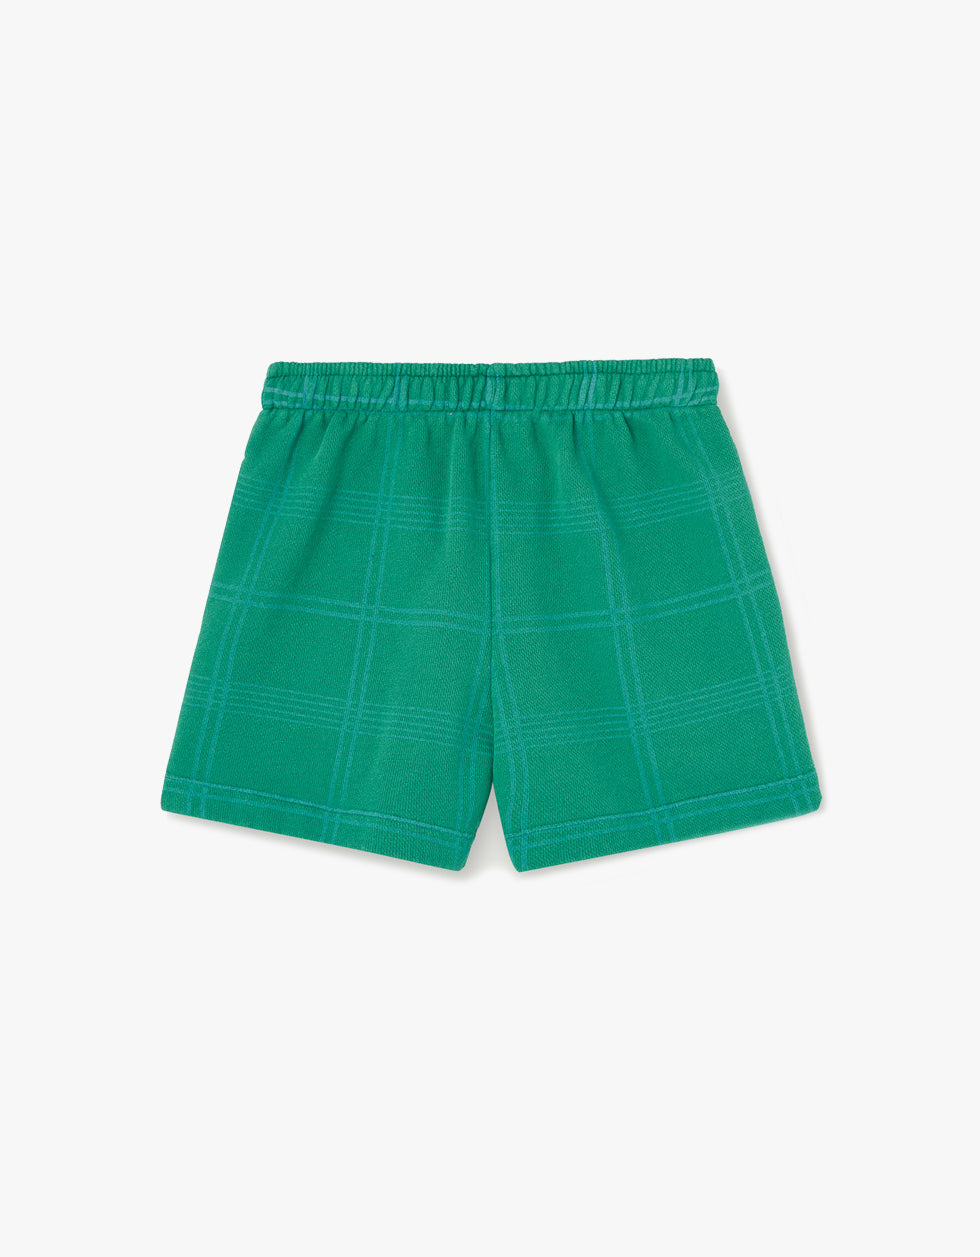 Hedgehog Shorts | Green